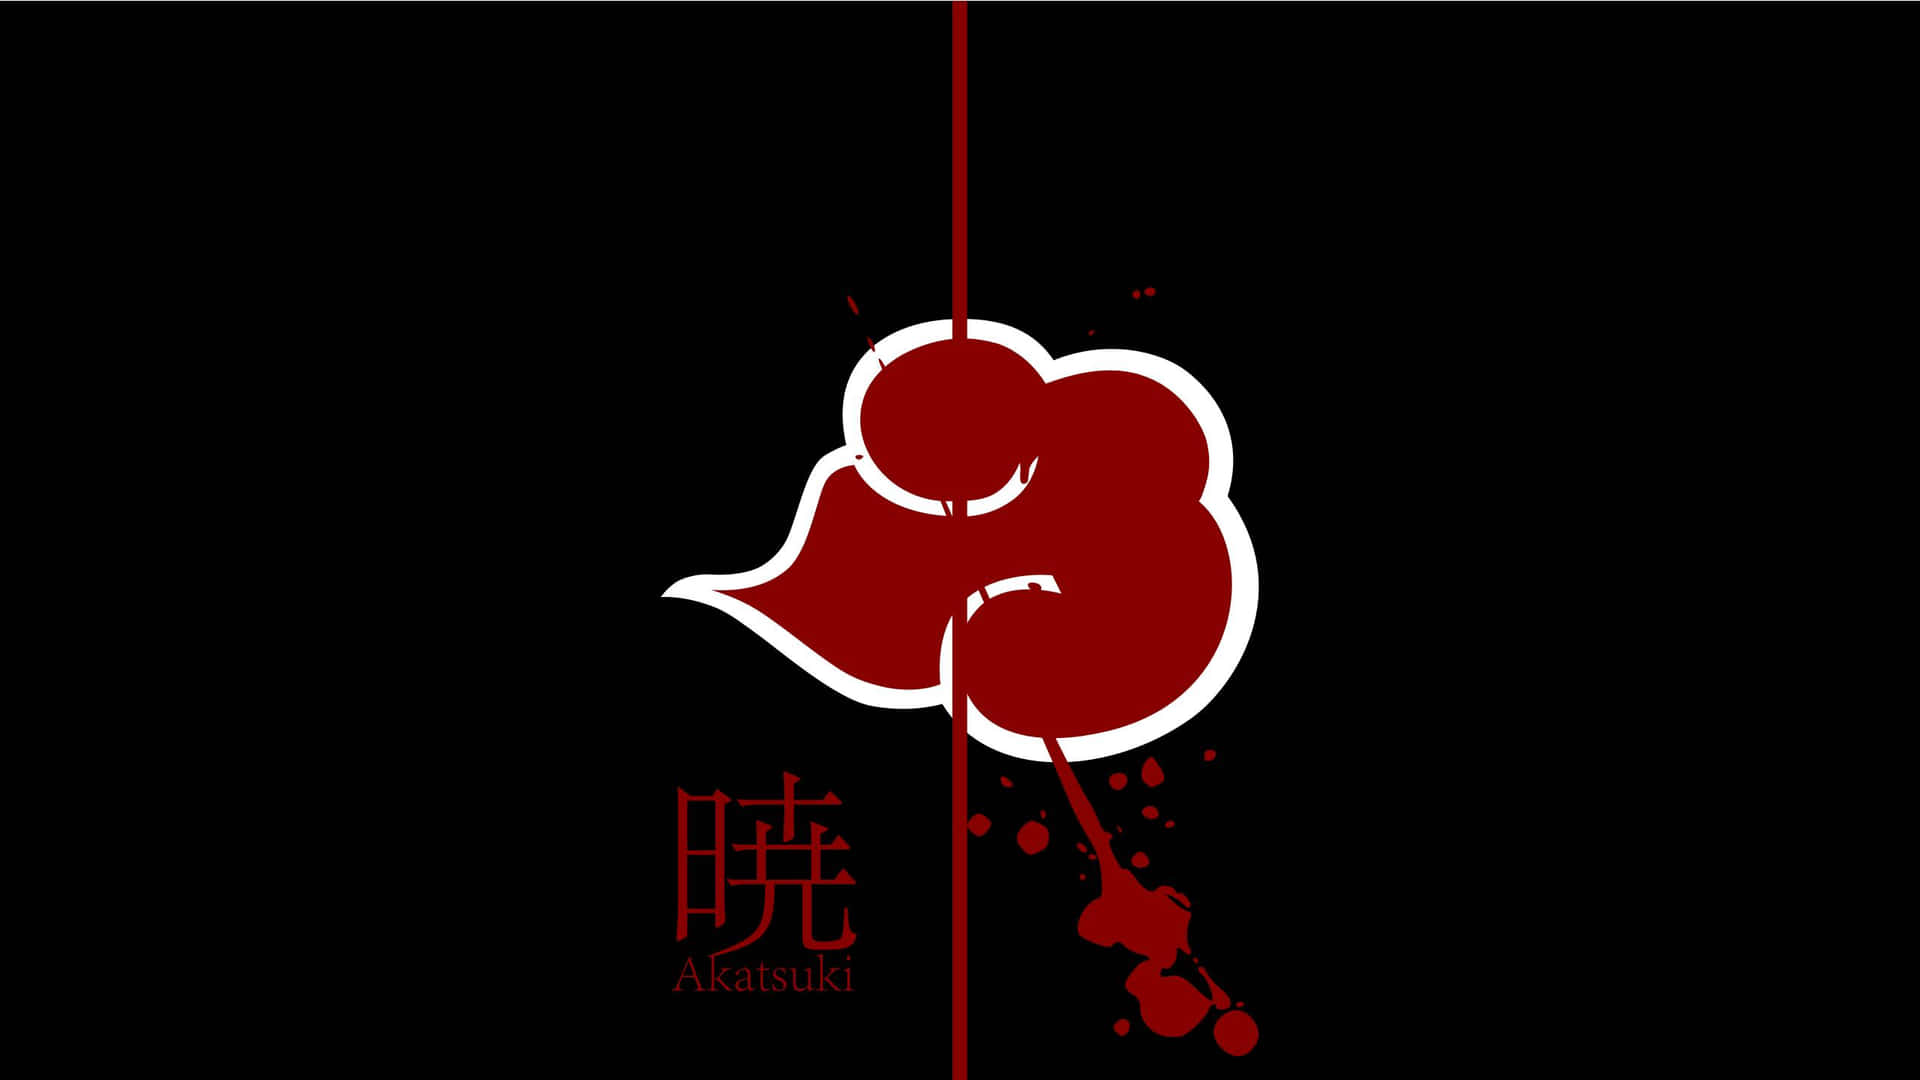 Hintergrundmit Dem Akatsuki-logo